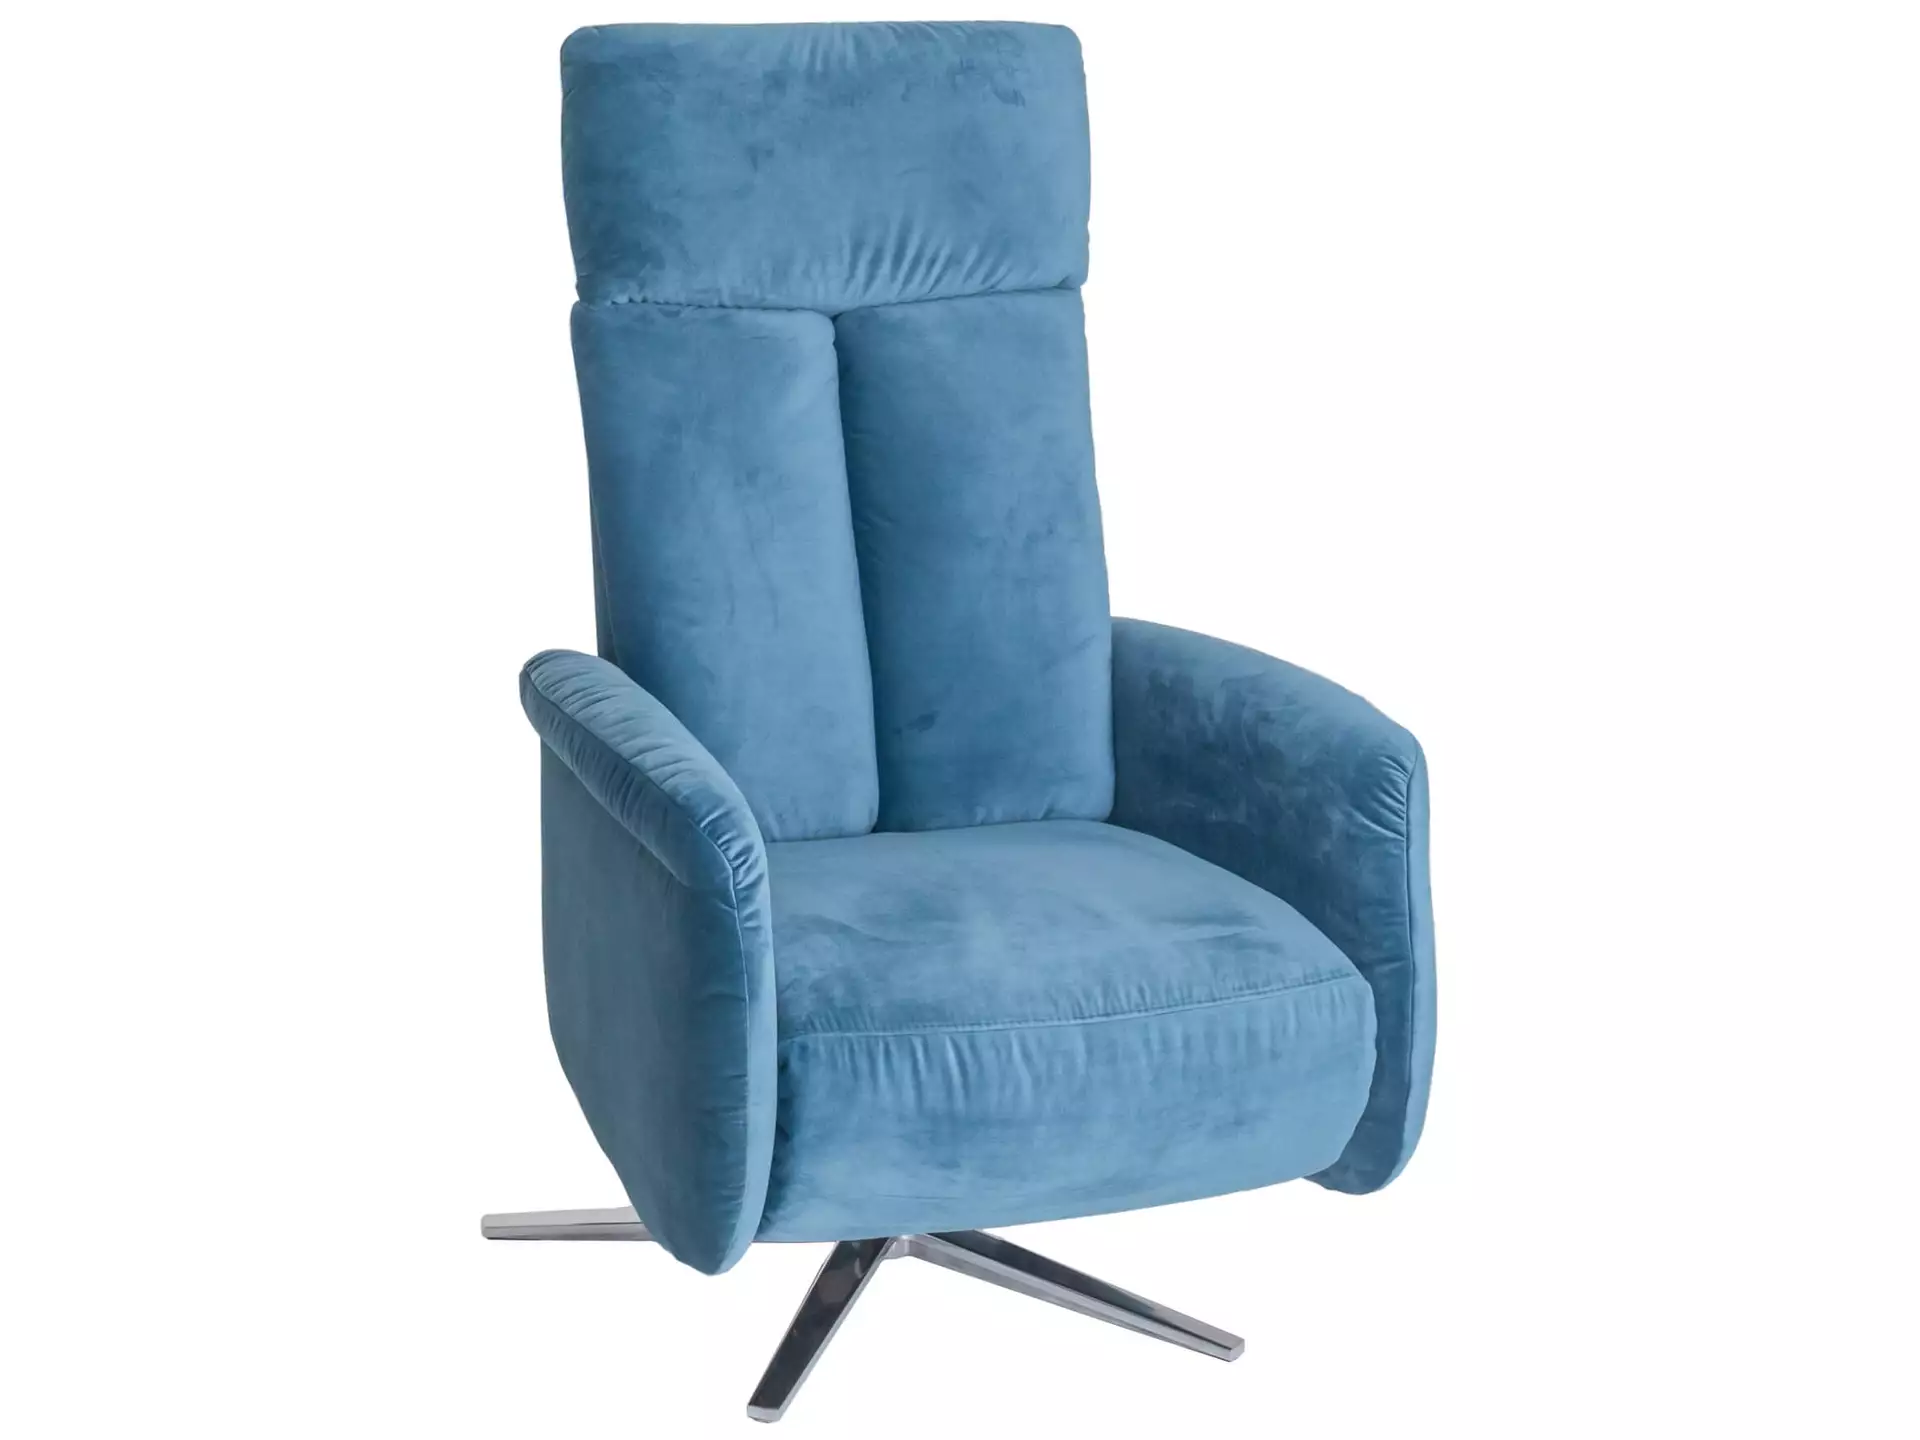 Relaxer Marlon Candy / Farbe: Blue Grey Velvet / Bezugsmaterial: Stoff